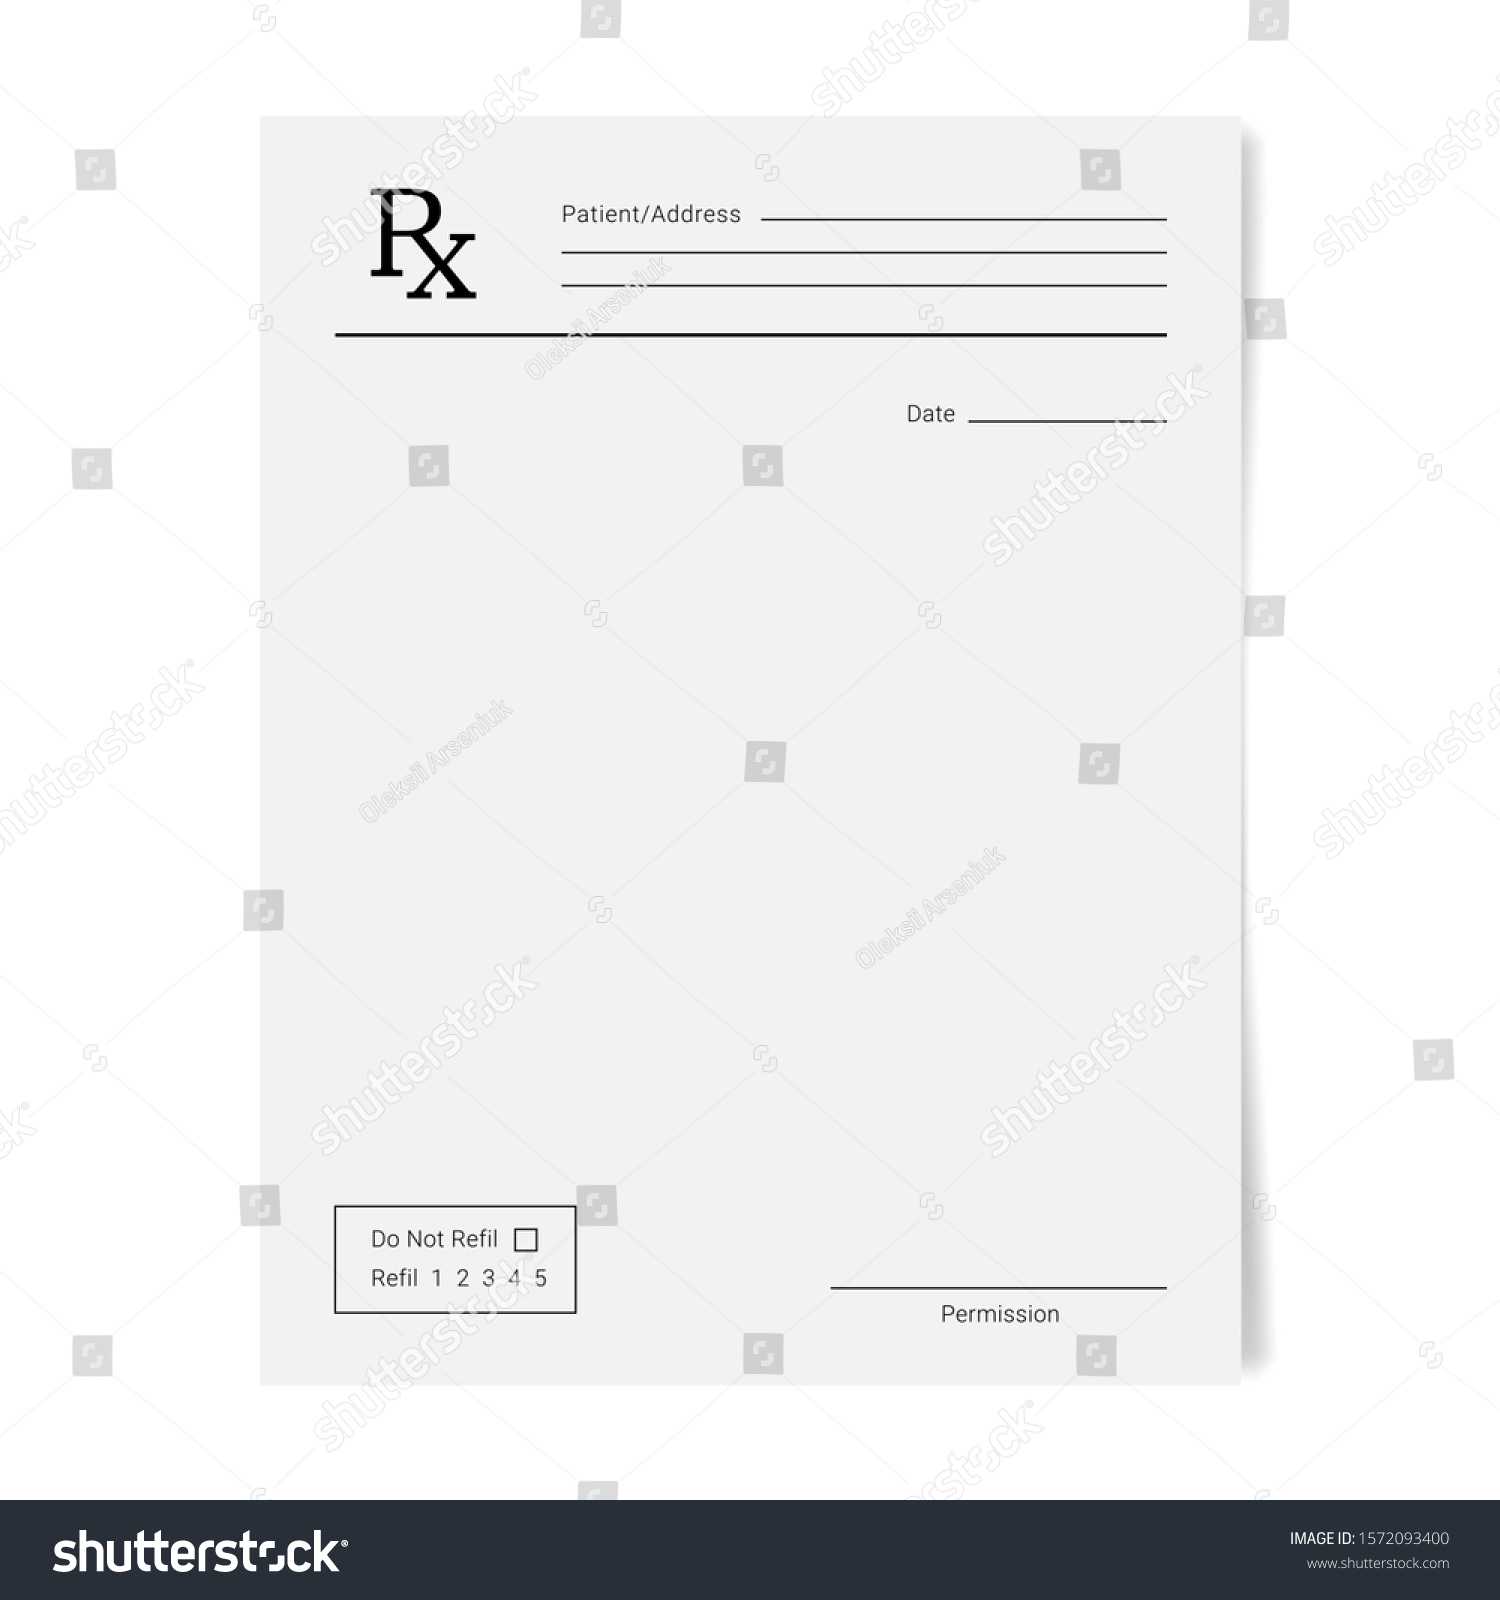 Rx: Изображения, Стоковые Фотографии И Векторная Графика With Blank Prescription Form Template